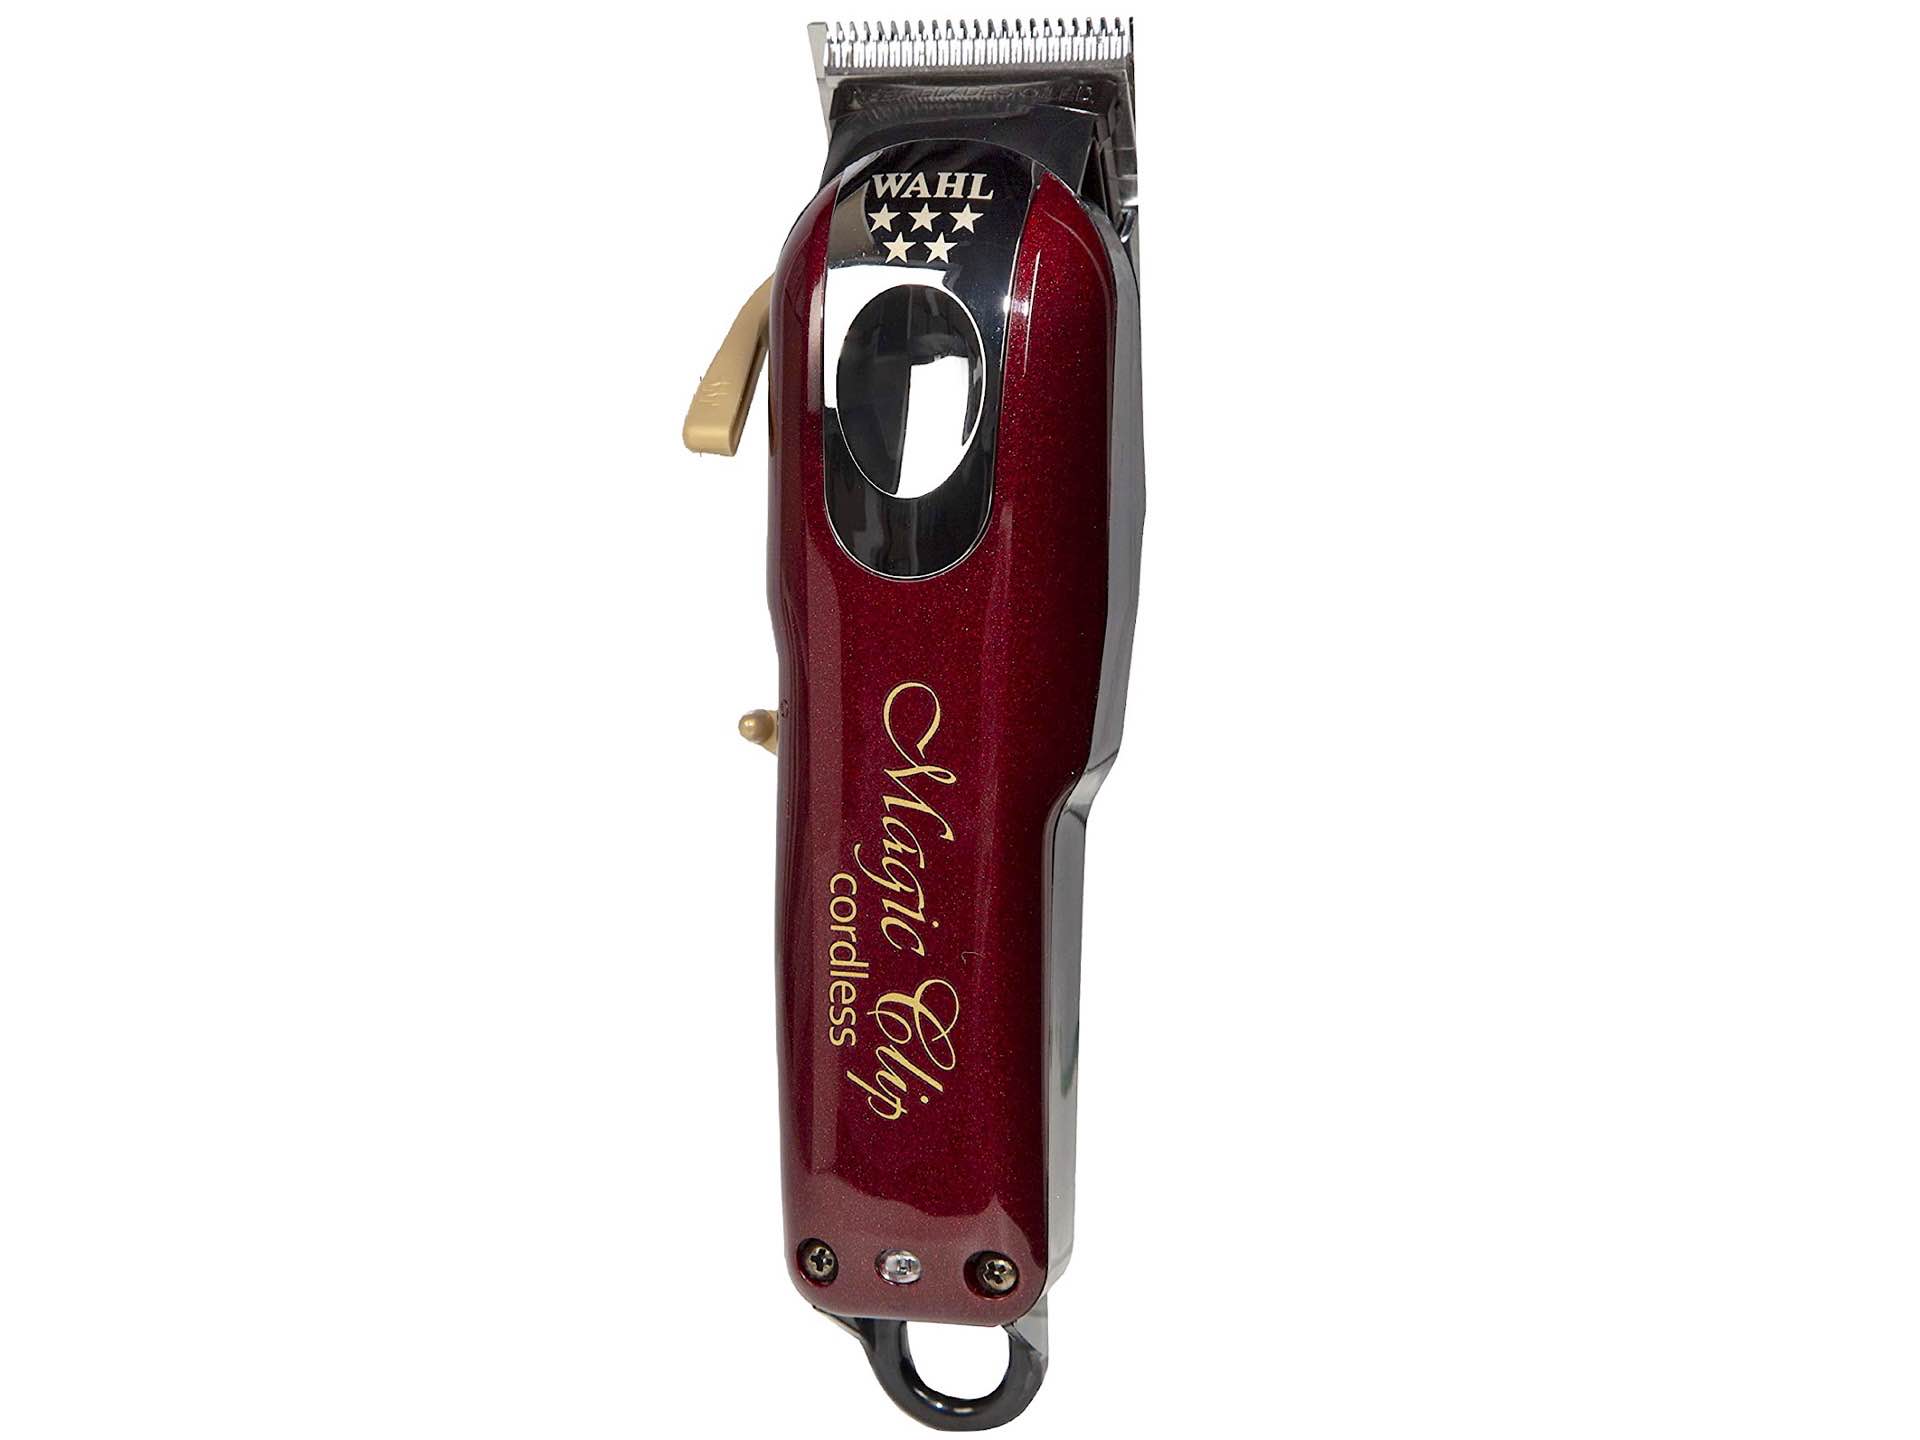 Wahl Magic Clip cordless hair clippers. ($124)